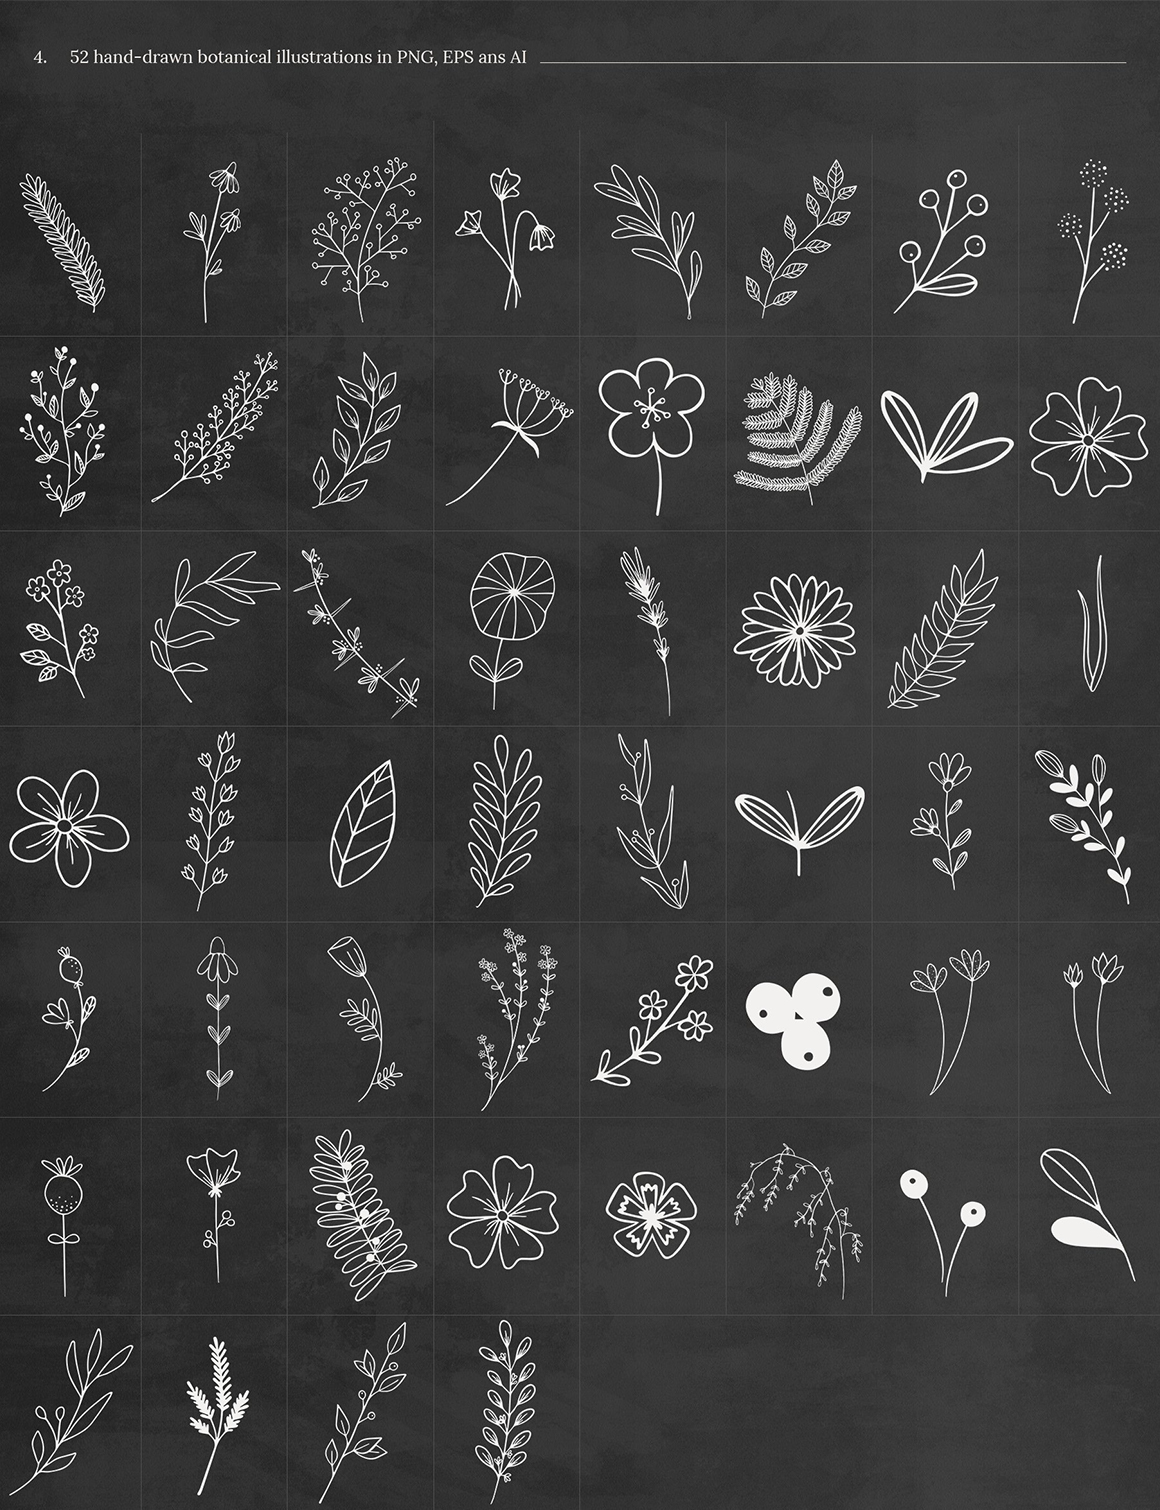 50+ Botanical Illustrations